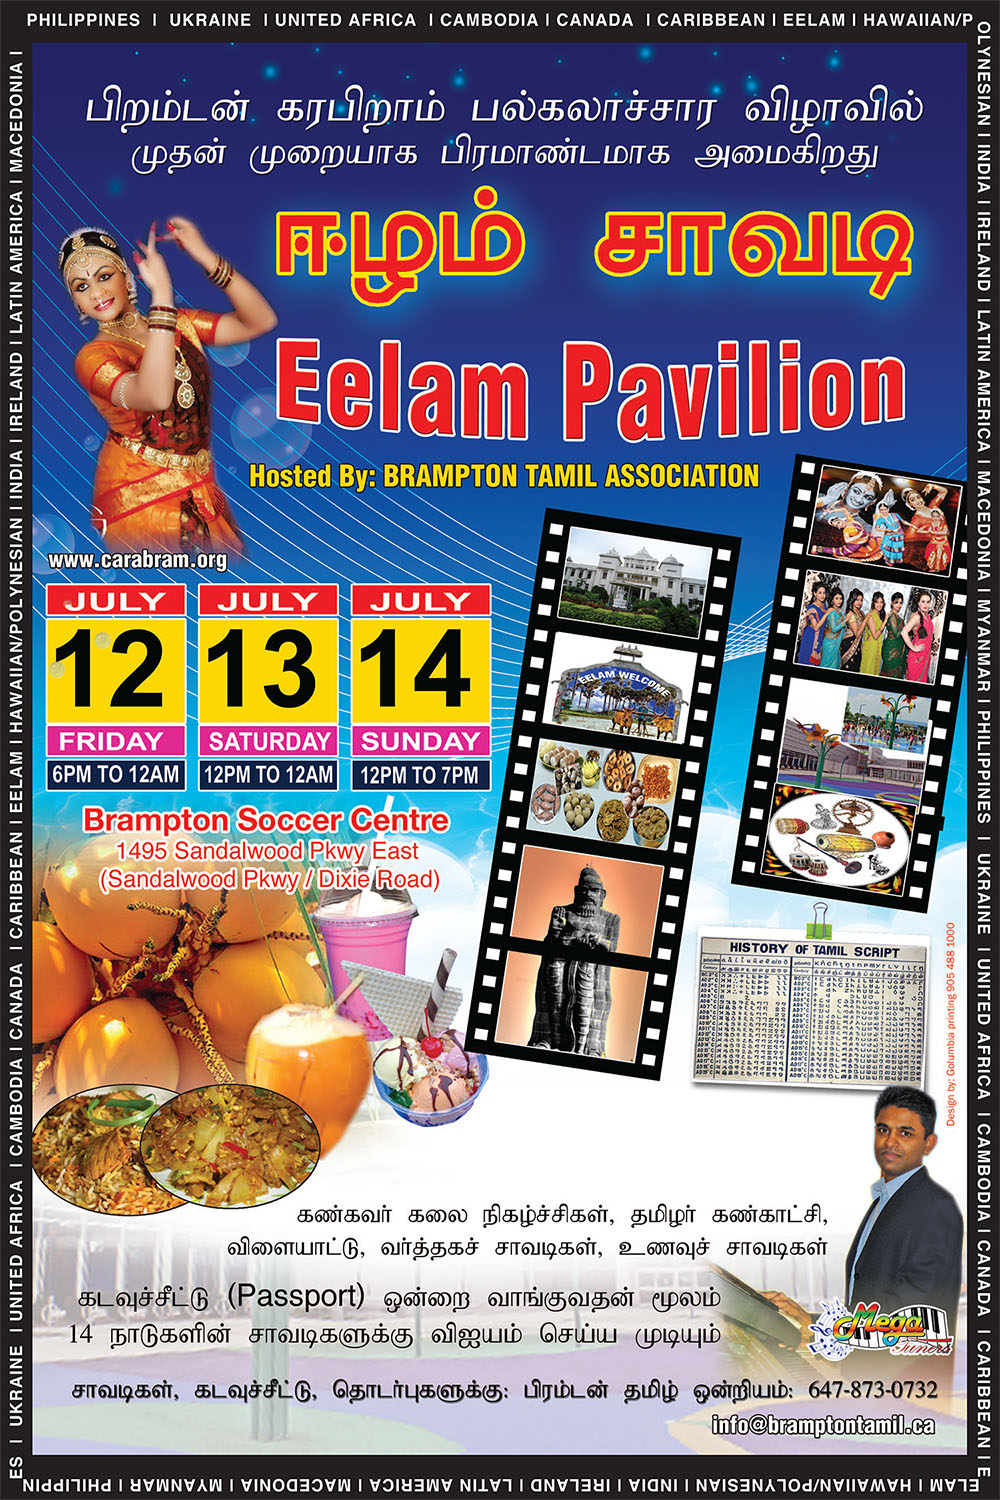 Eelam Pavilion July 12,13 & 14, 2013!